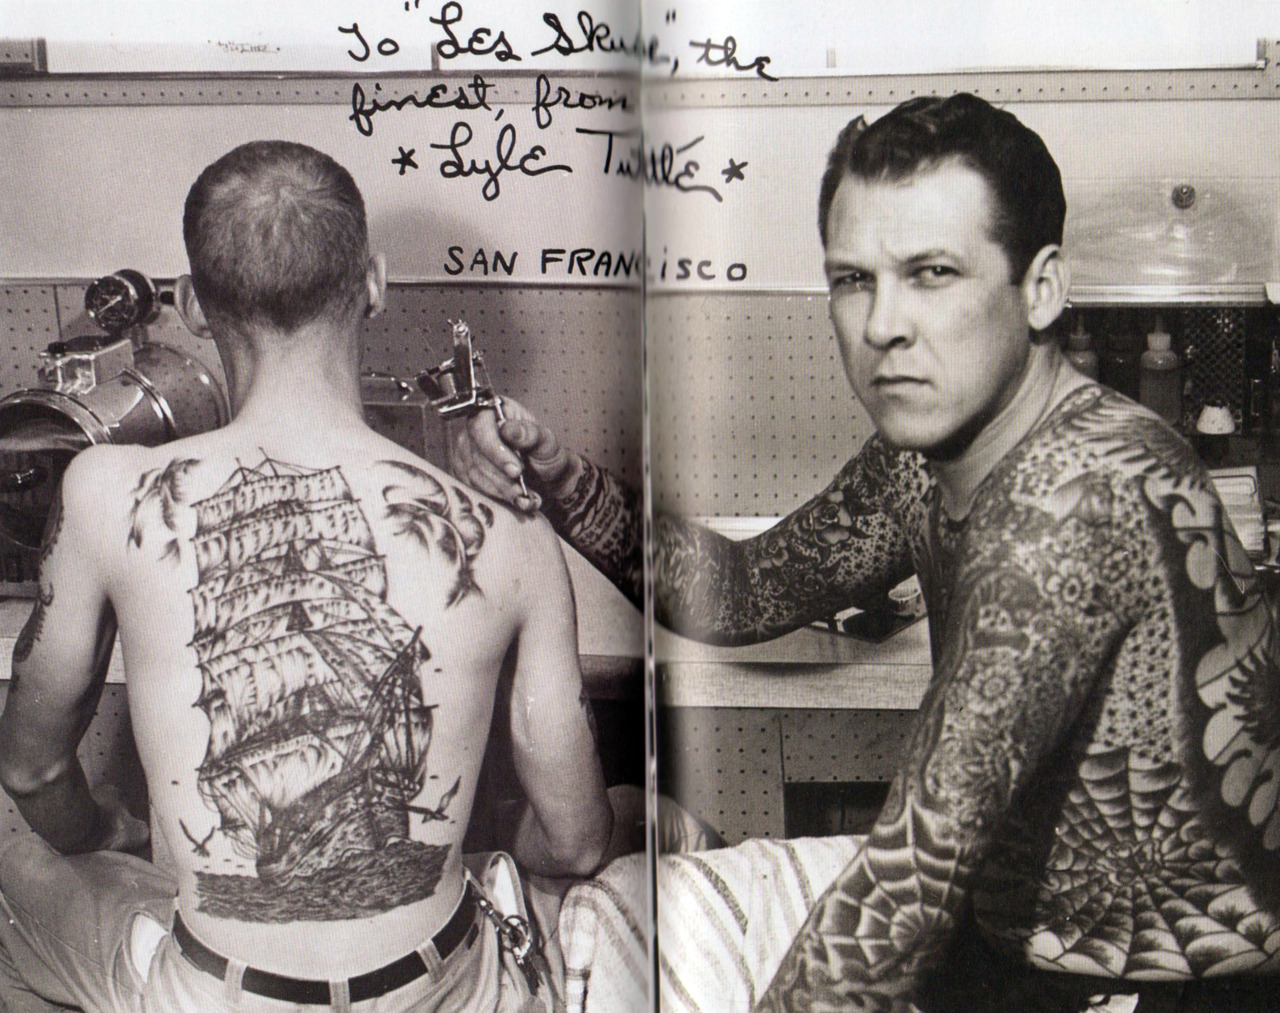 vintage-tattoo:Lyle Tuttle at work, San Francisco, USA, California, 1960s